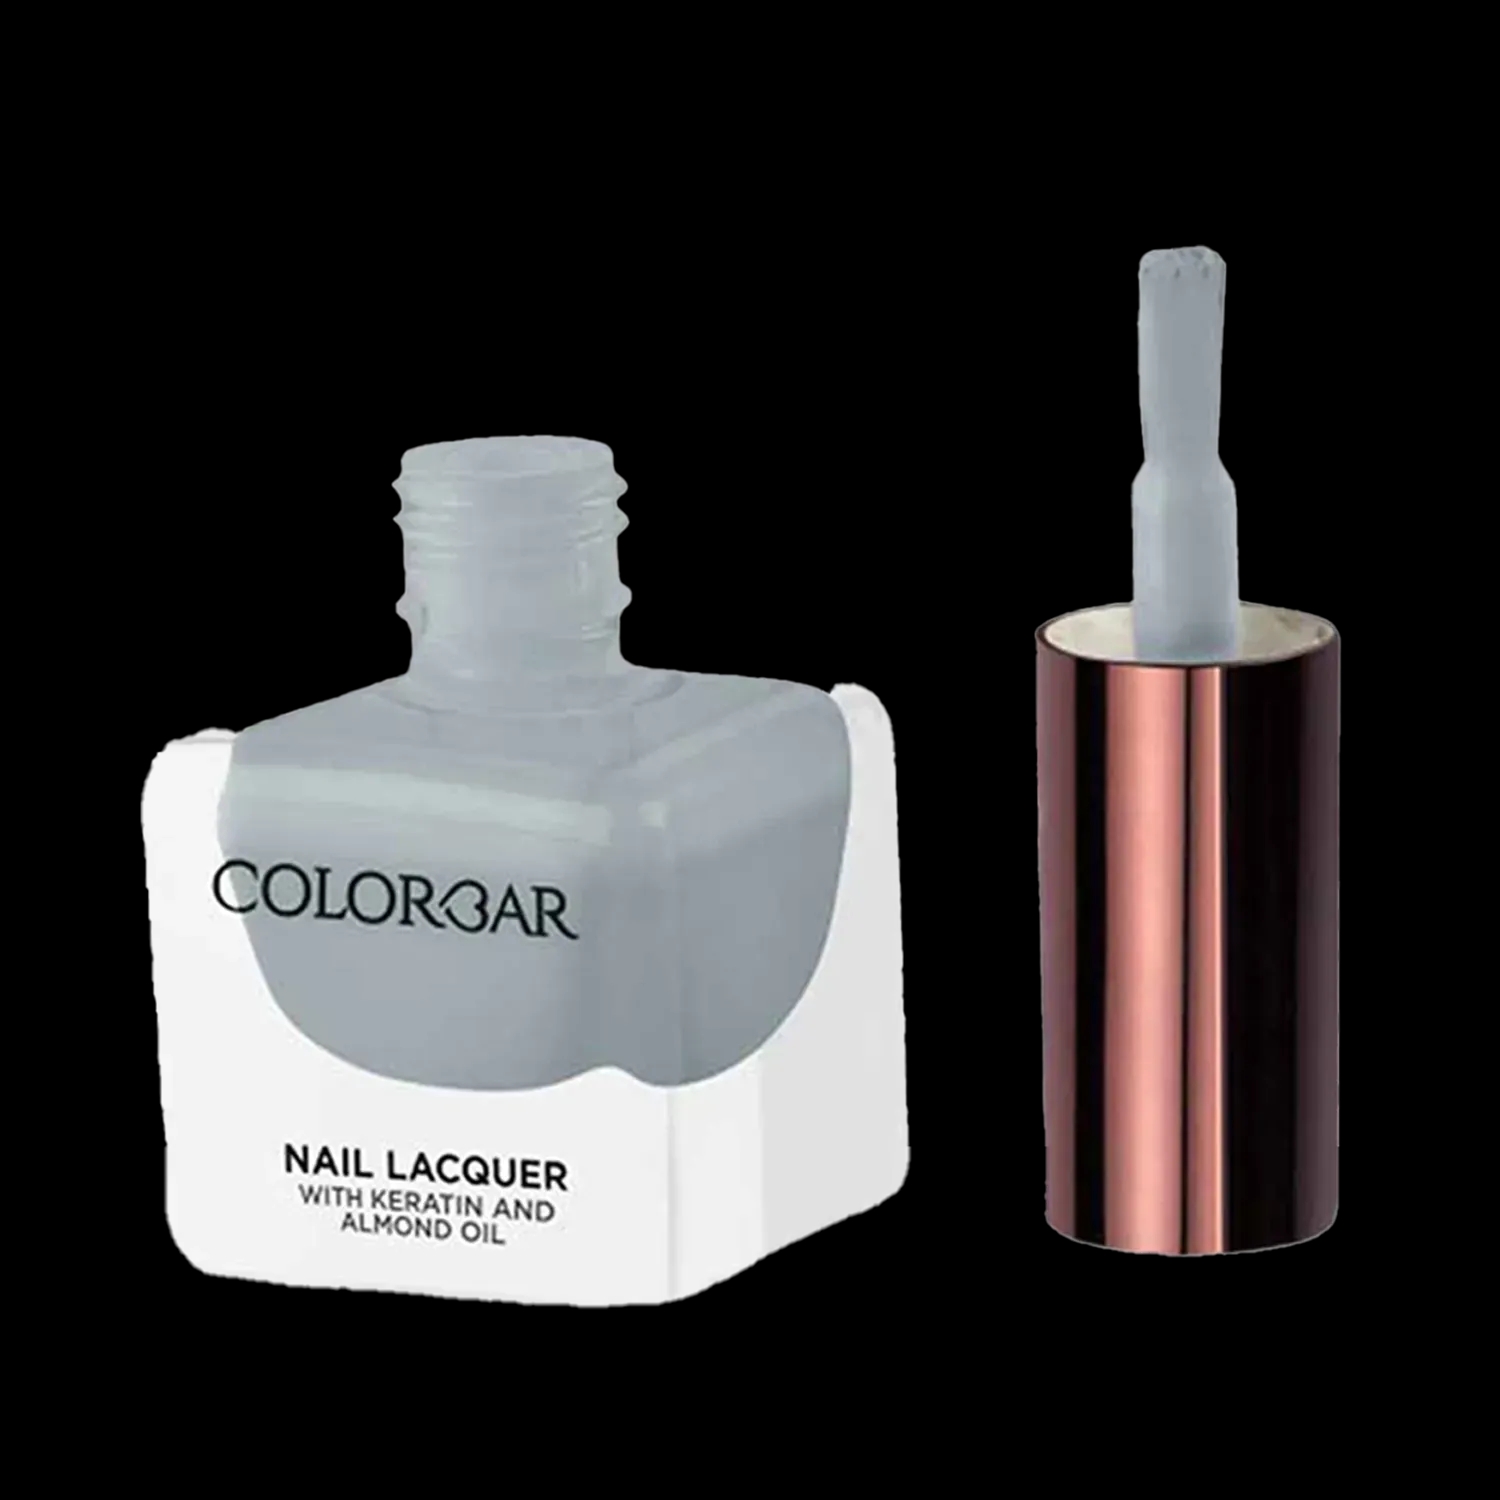 Colorbar Nail Polish Remover 110 ml | eBay-cacanhphuclong.com.vn